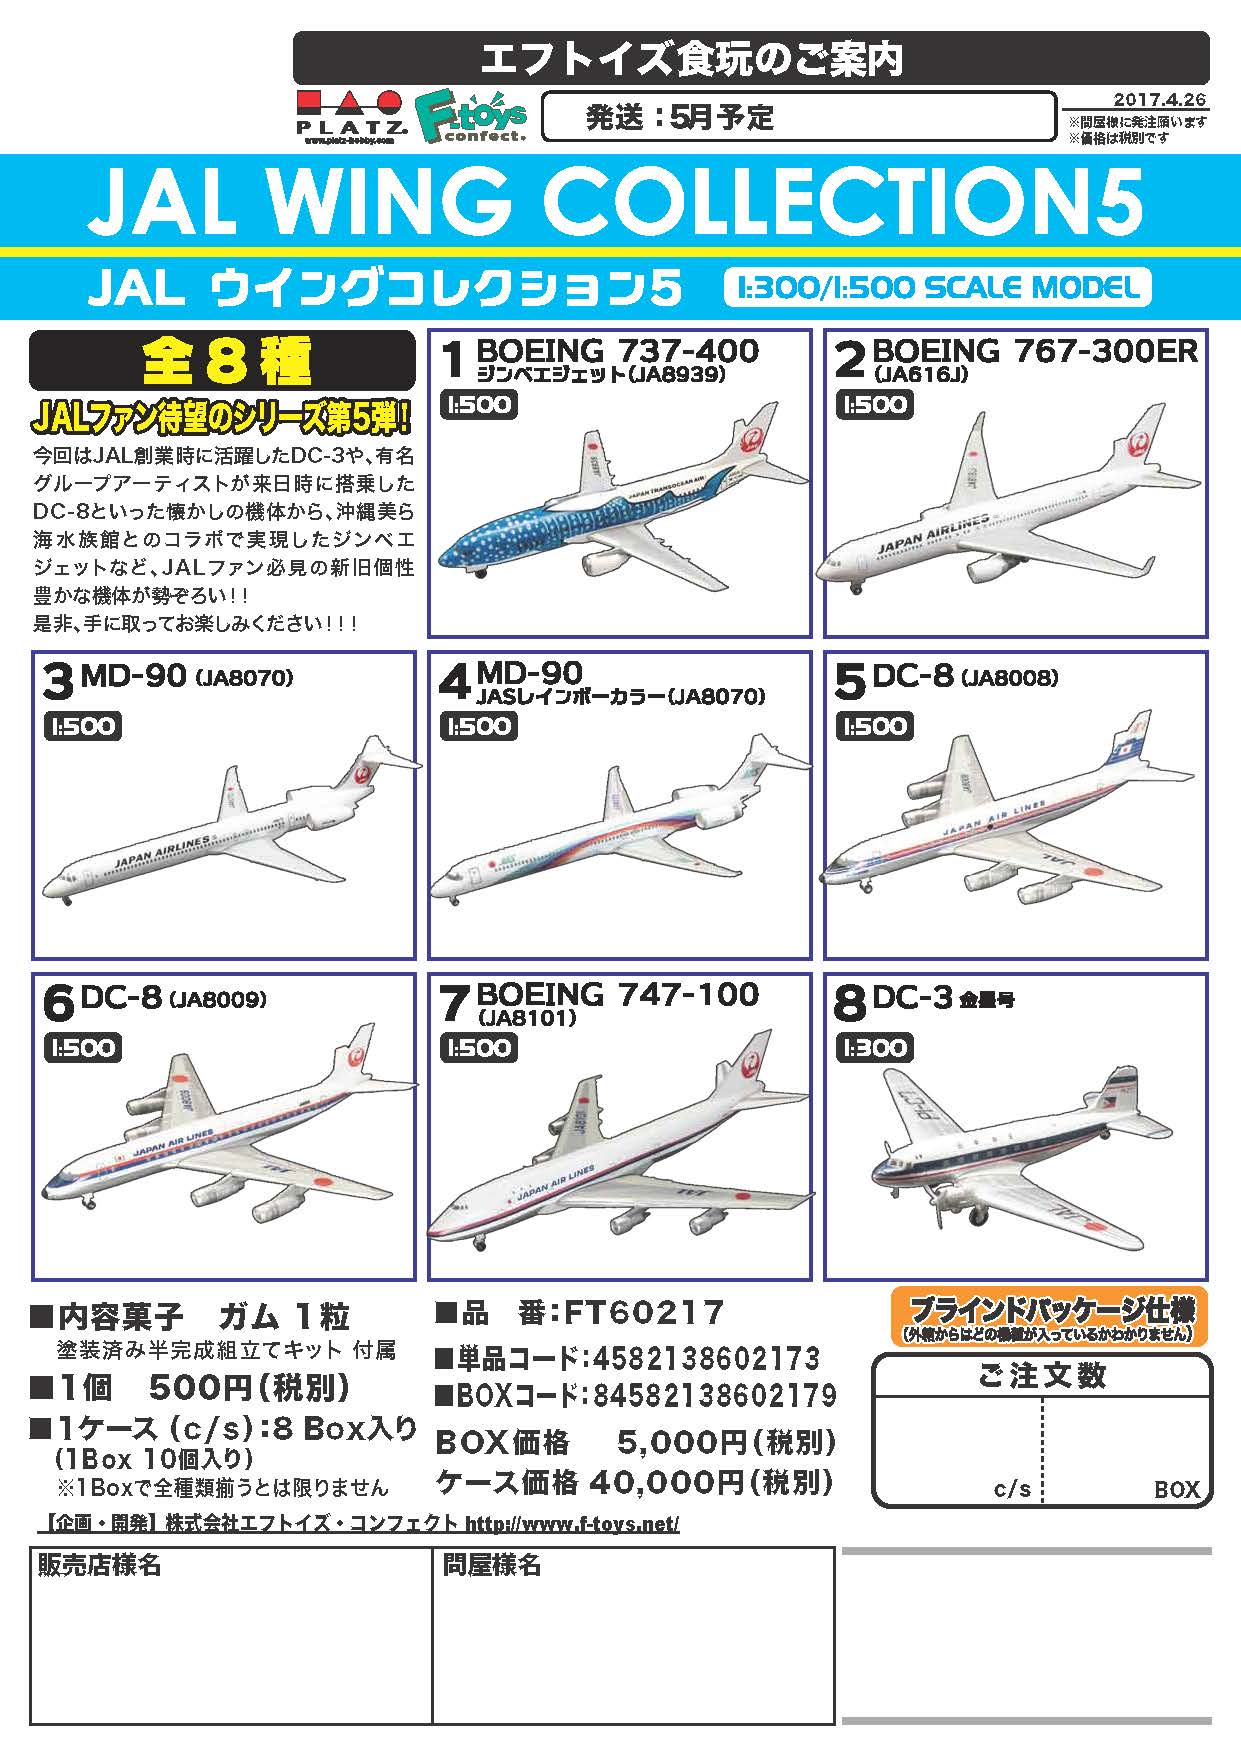 【B】三次再版 食玩 盒蛋 机模 JAL空客系列 5 全8种 602179SC